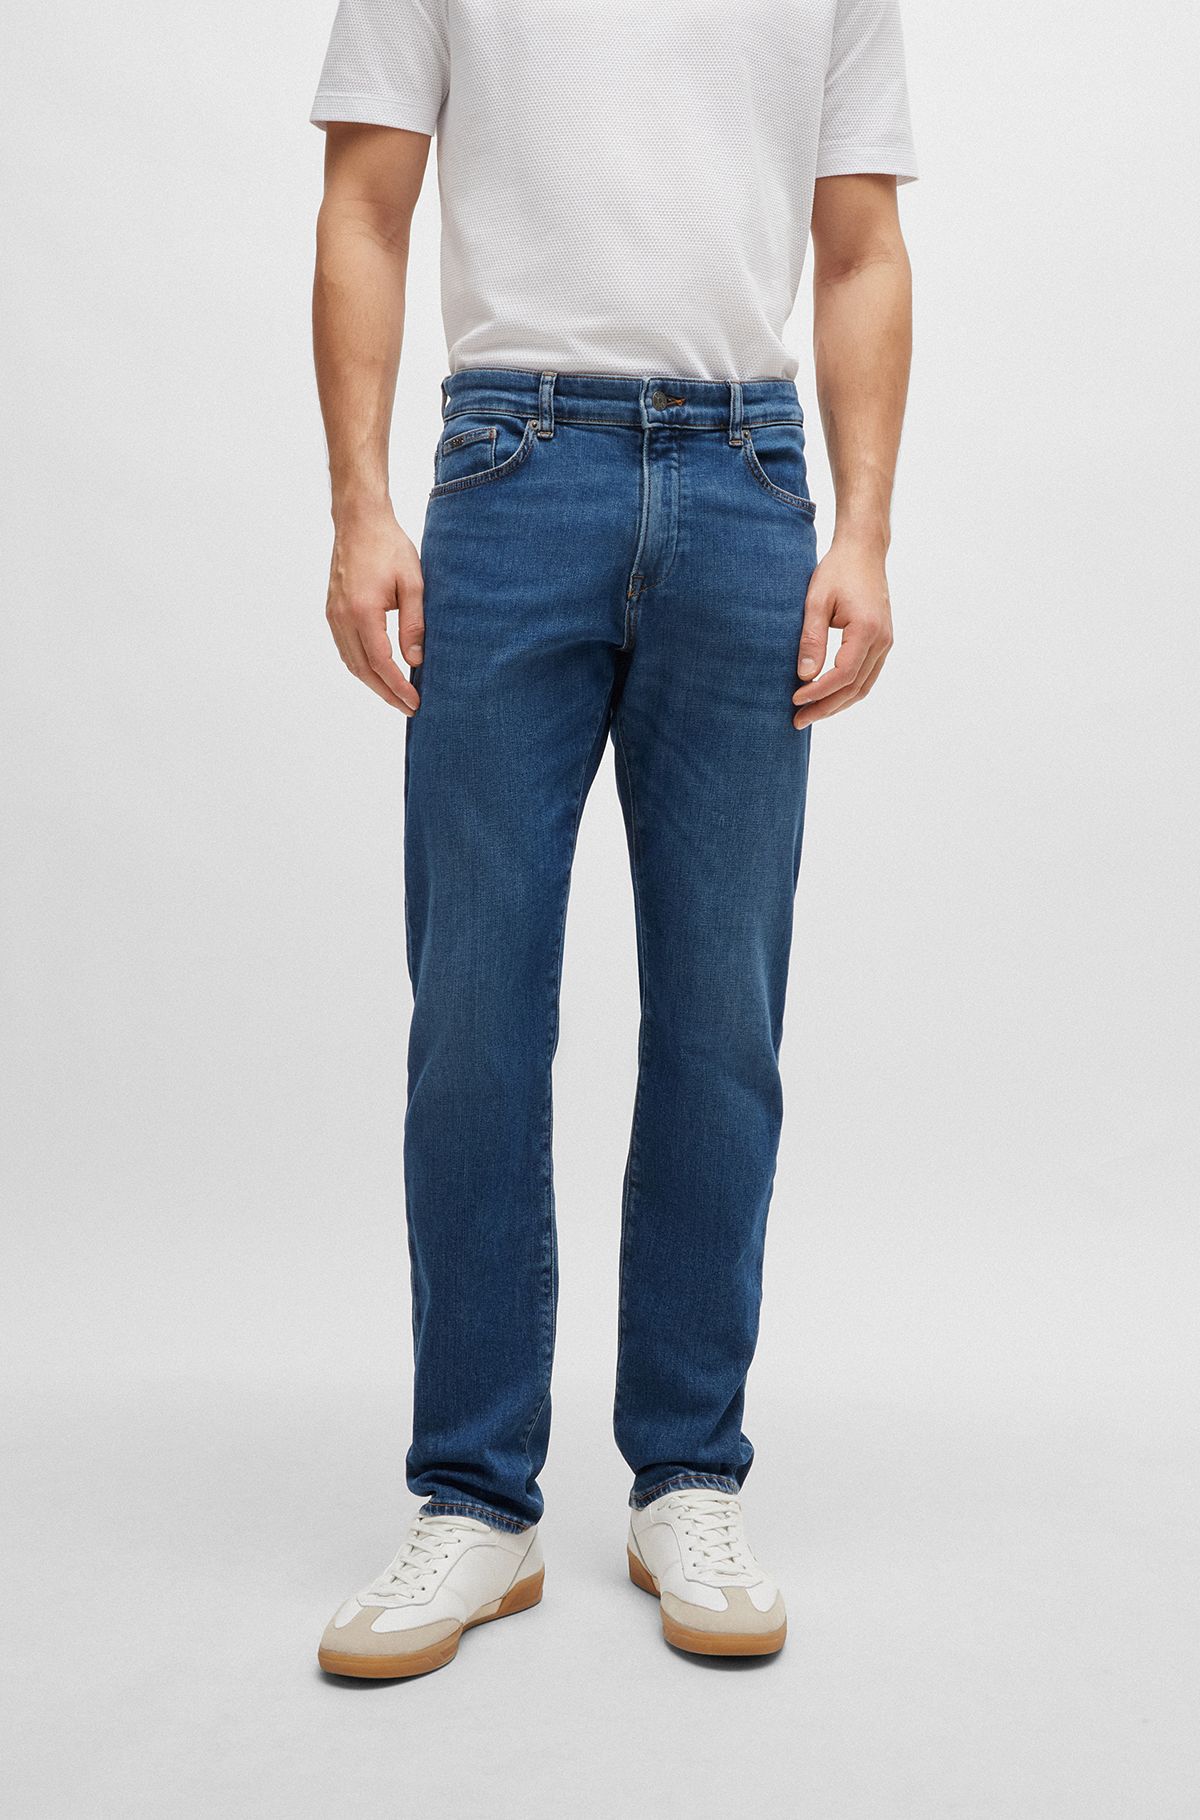 Blaue Slim-Fit Jeans aus bequemem Stretch-Denim, Blau